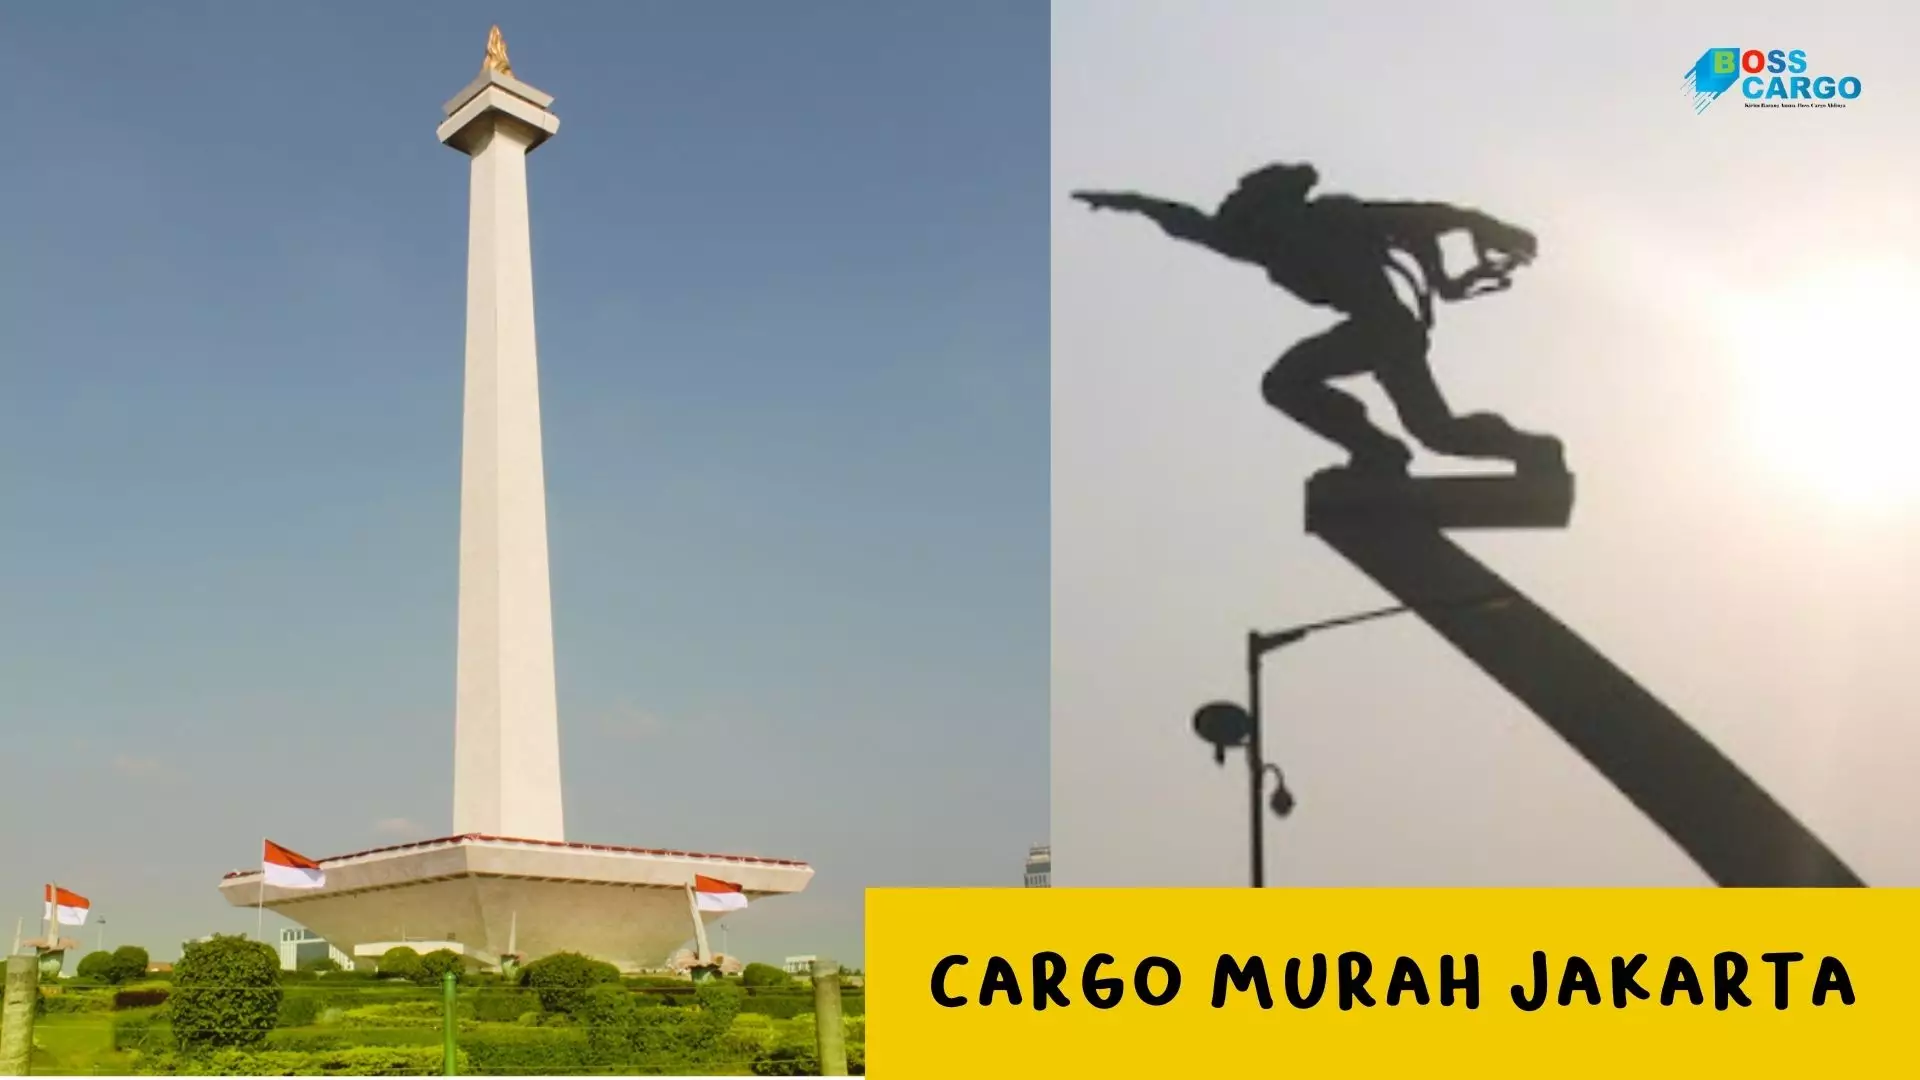 Cargo Murah Jakarta